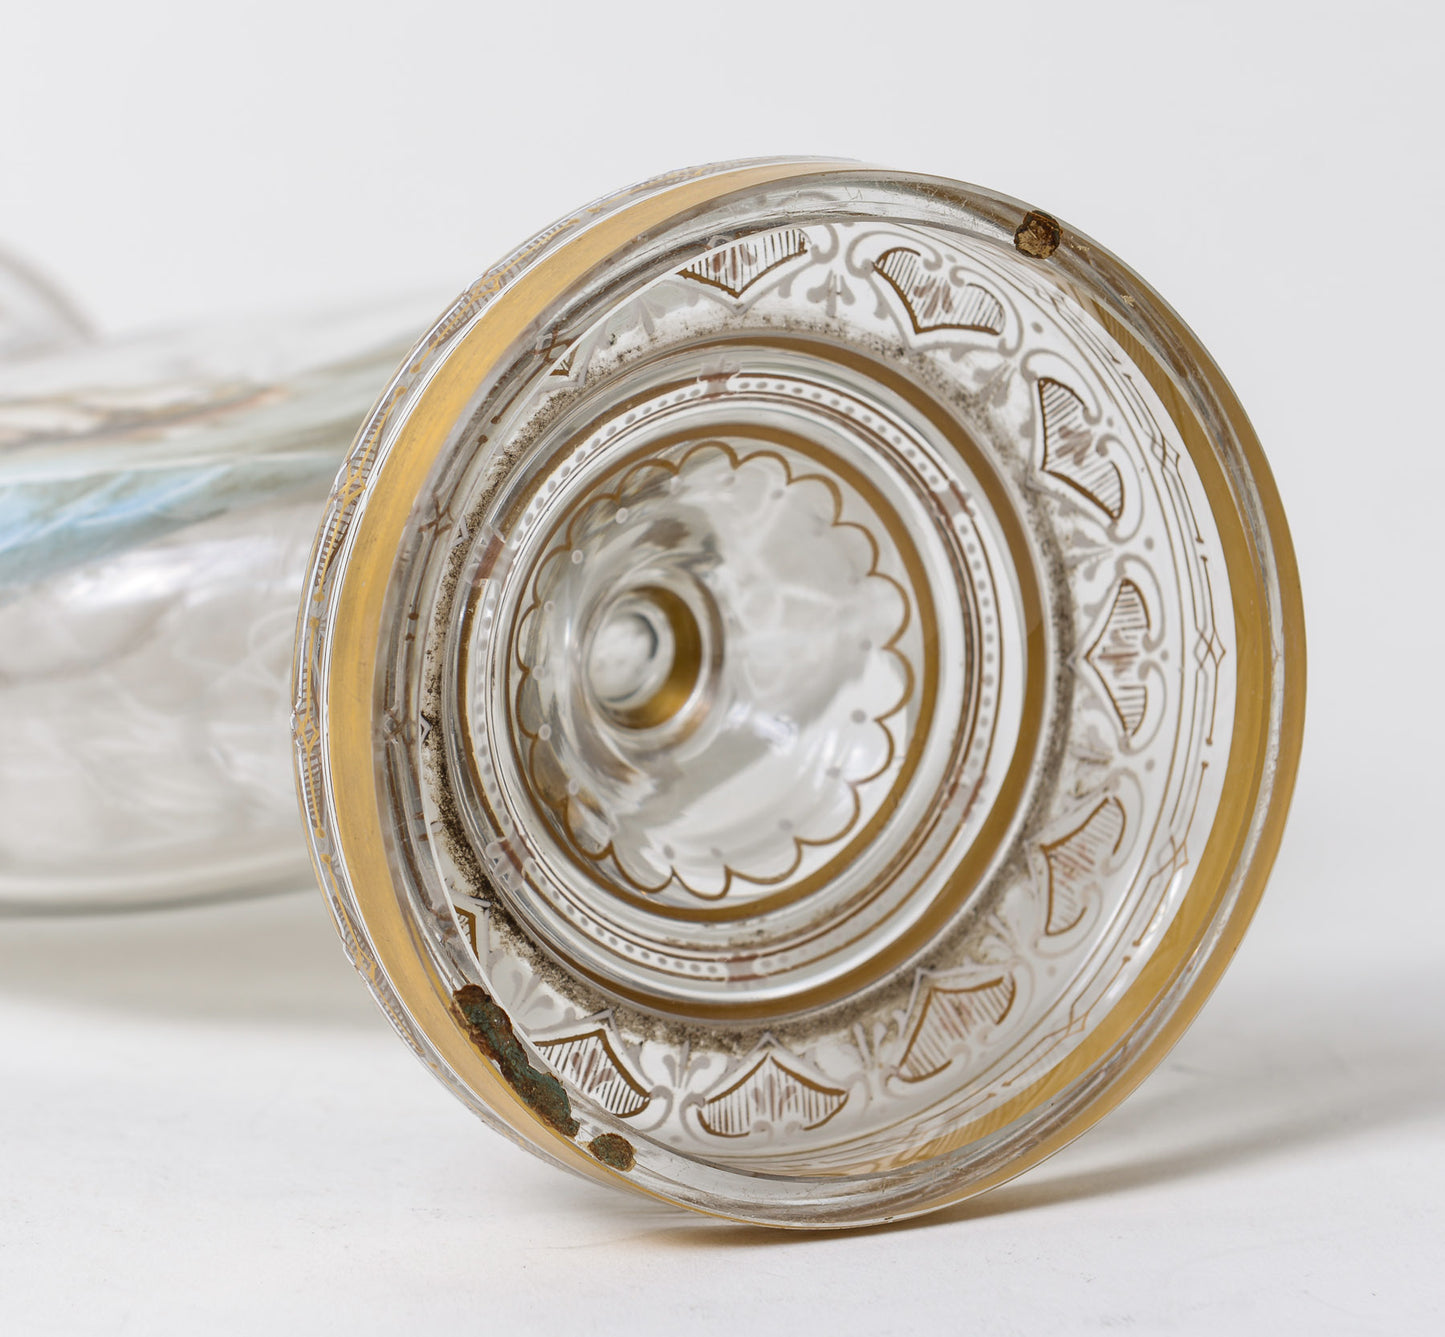 Antique Victorian Hand Painted Glass Antarctic Exploration & Sailing Ship Vase (Code 0249)